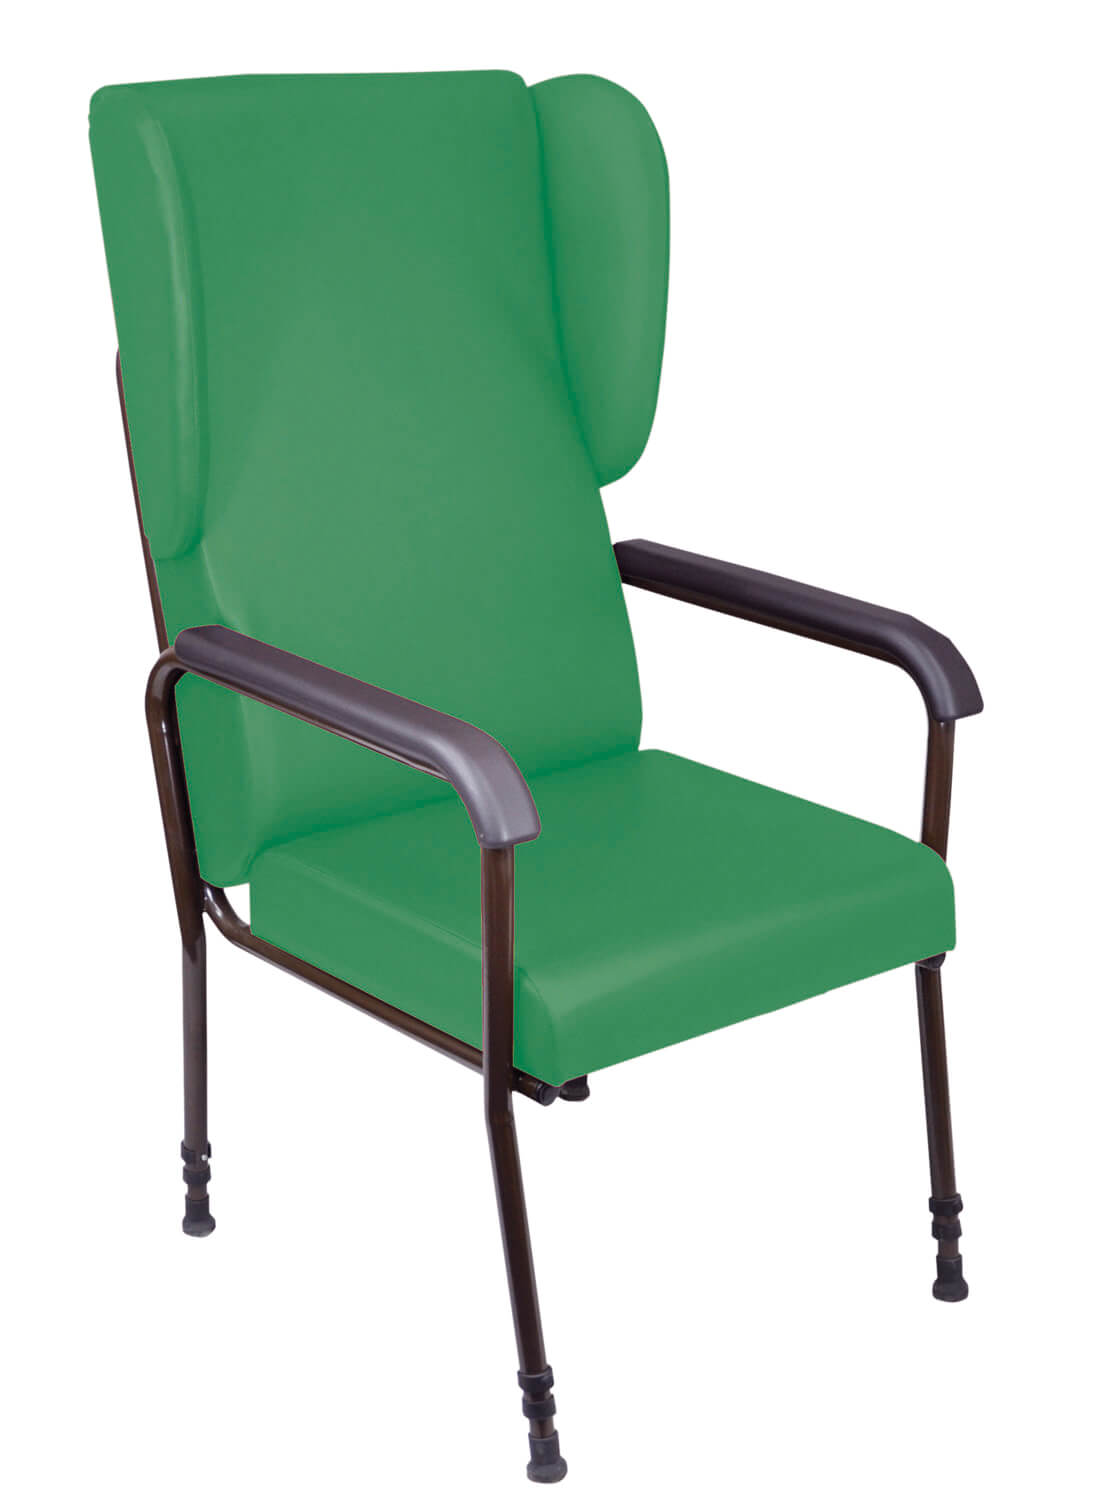 Green Adjustable Chair